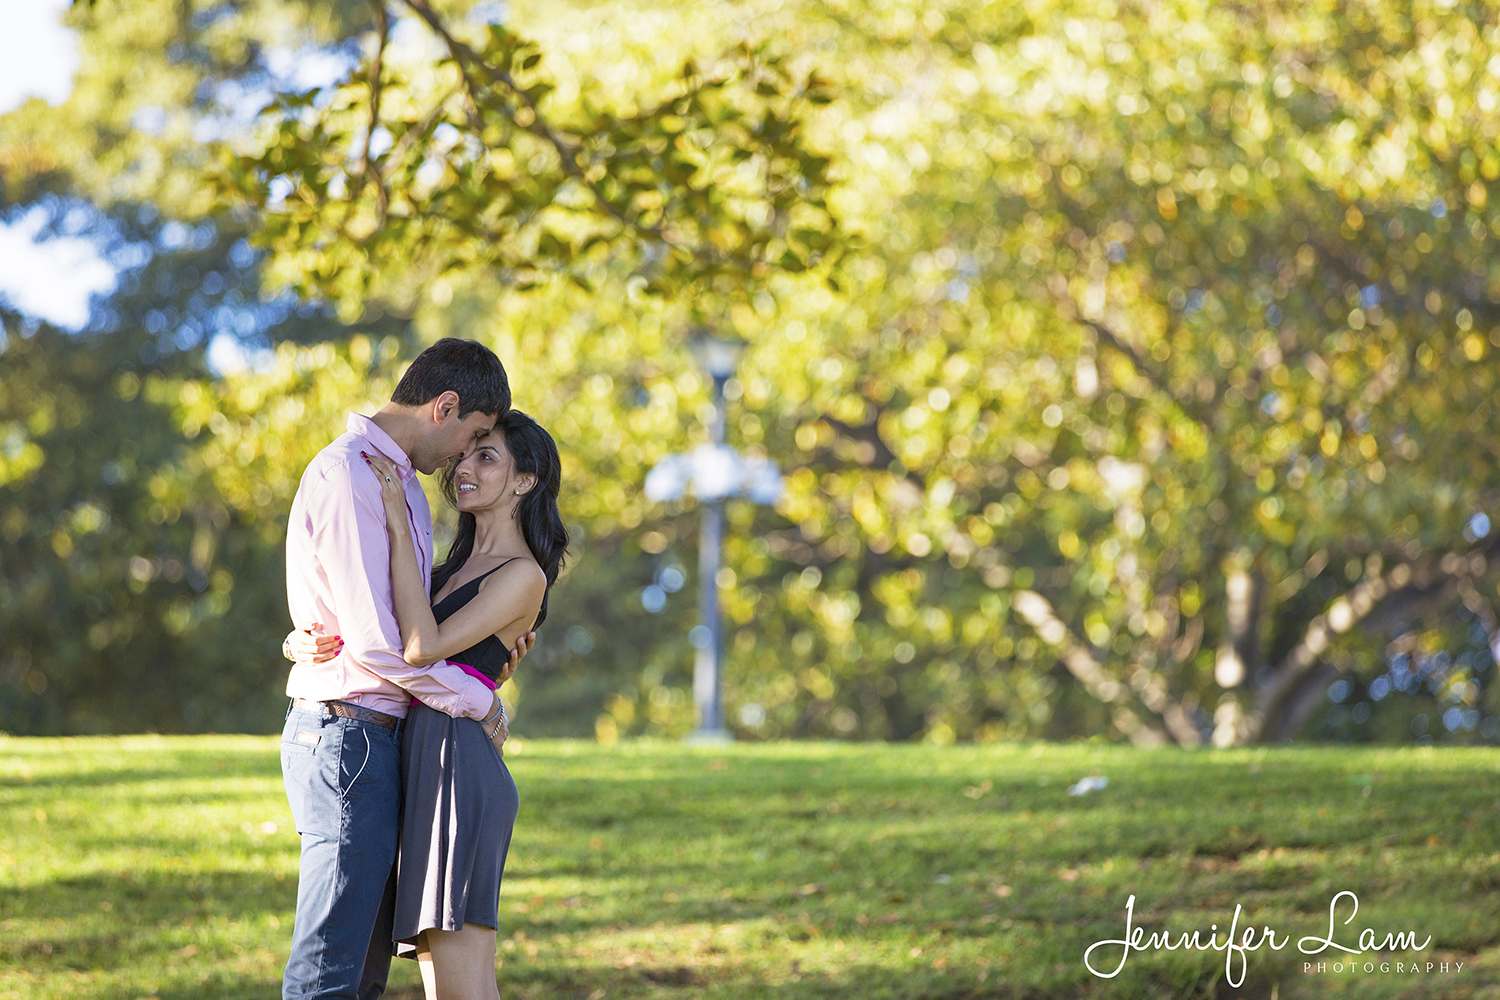 S&J - Jennifer Lam Photography - Sydney Wedding Photographer (7).jpg